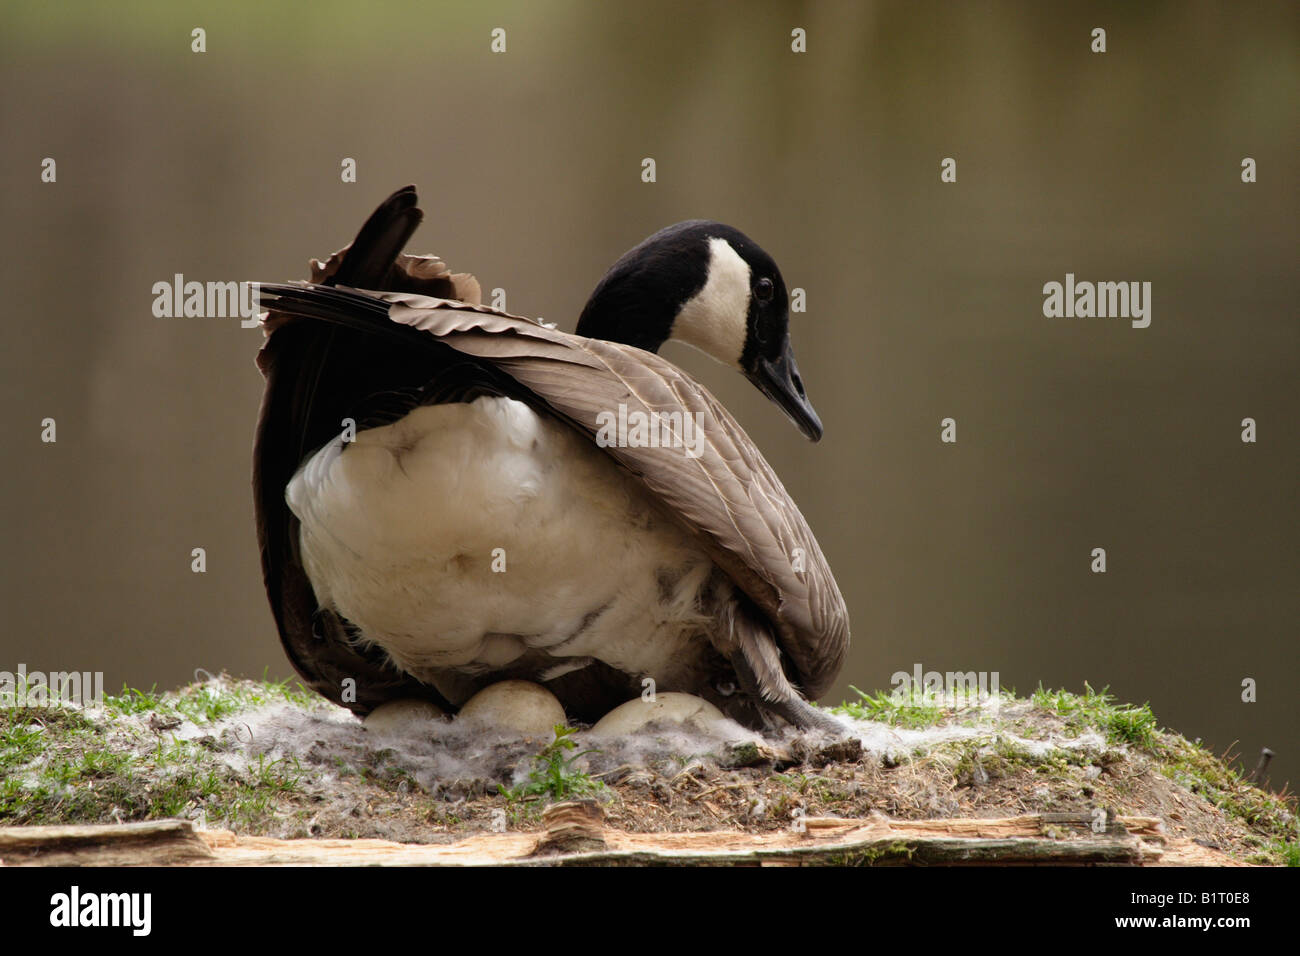 Canada Goose (Branta canadensis) on its nest, Lueerwald, Sauerland, North Rhine-Westphalia, Germany, Europe Stock Photo